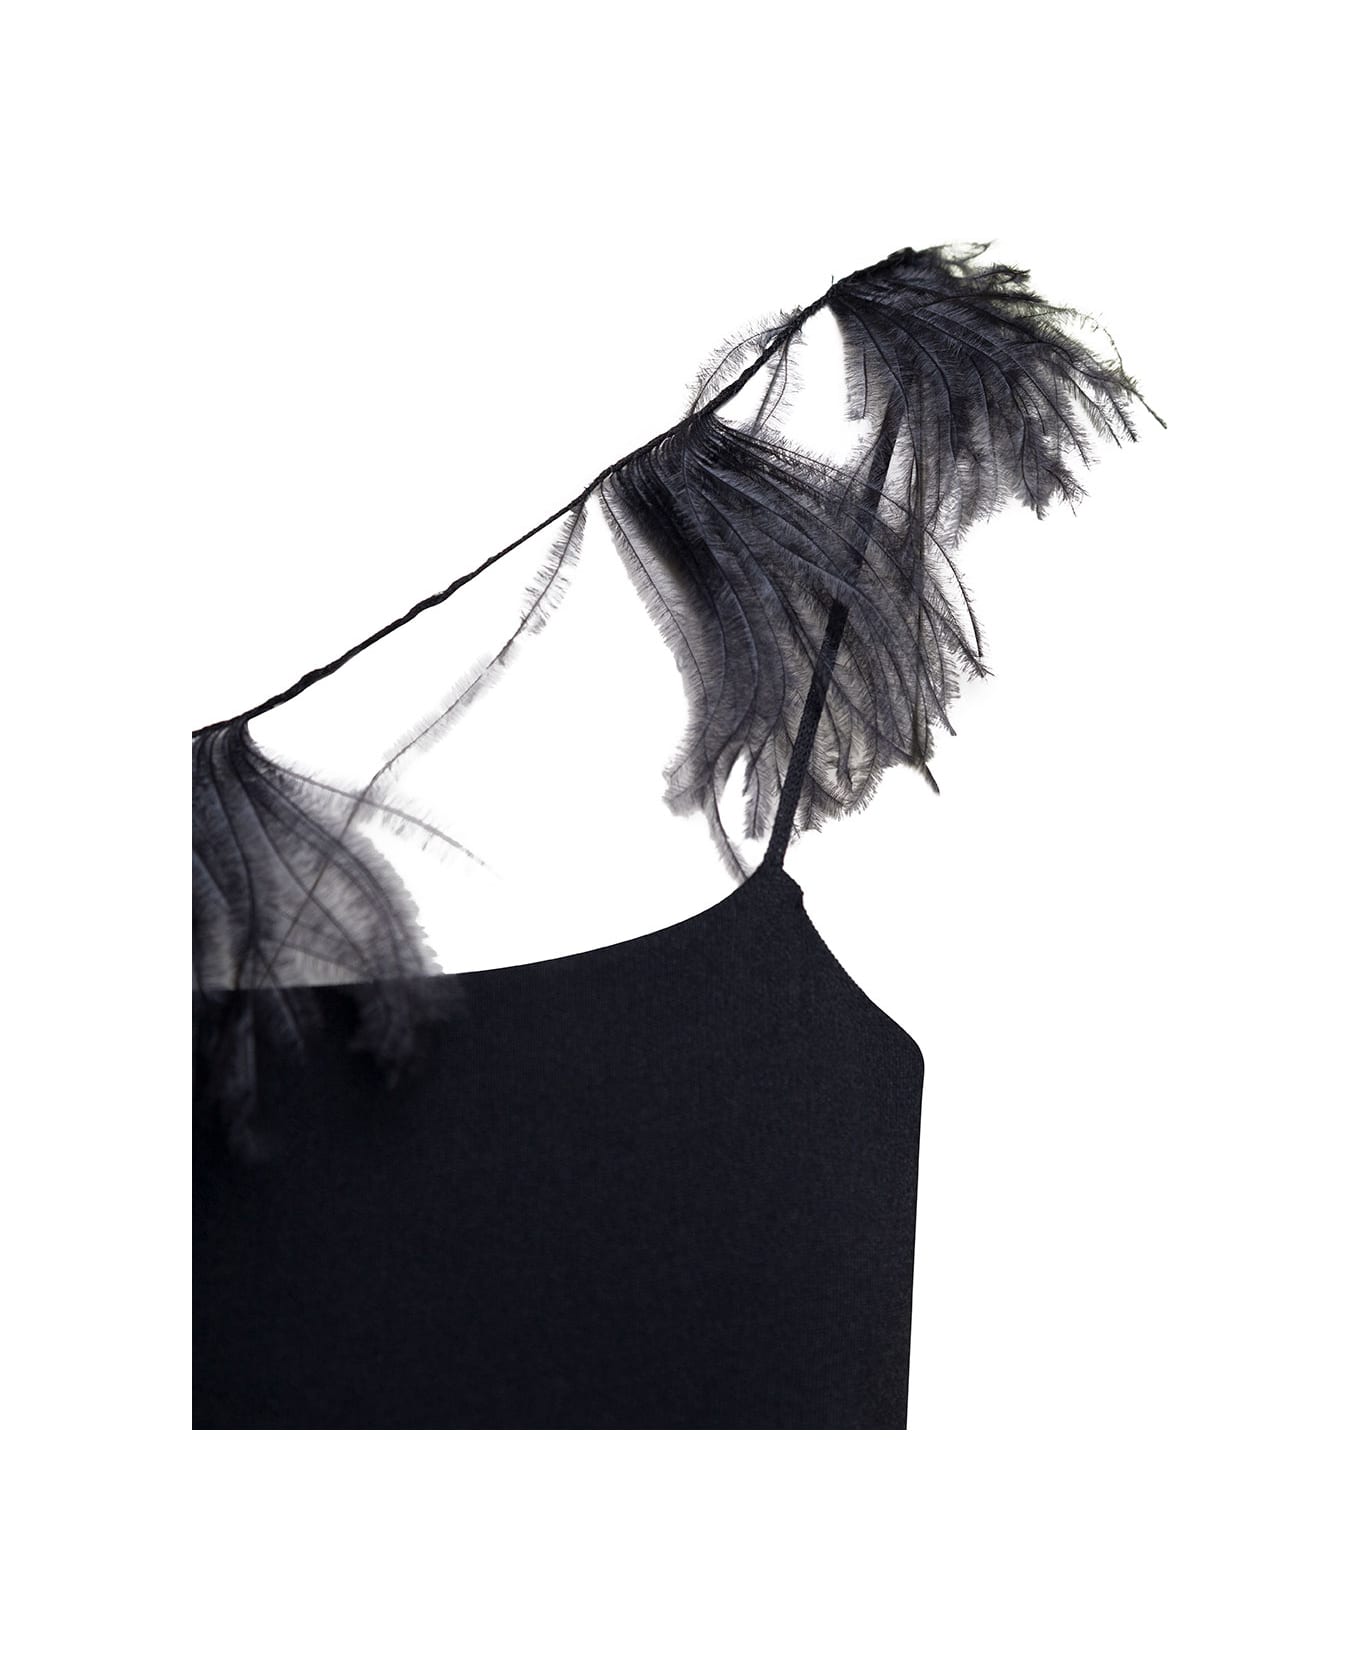 Jil Sander Midi Black Ribbed Dress With Feathers Embellishment Woman - Black